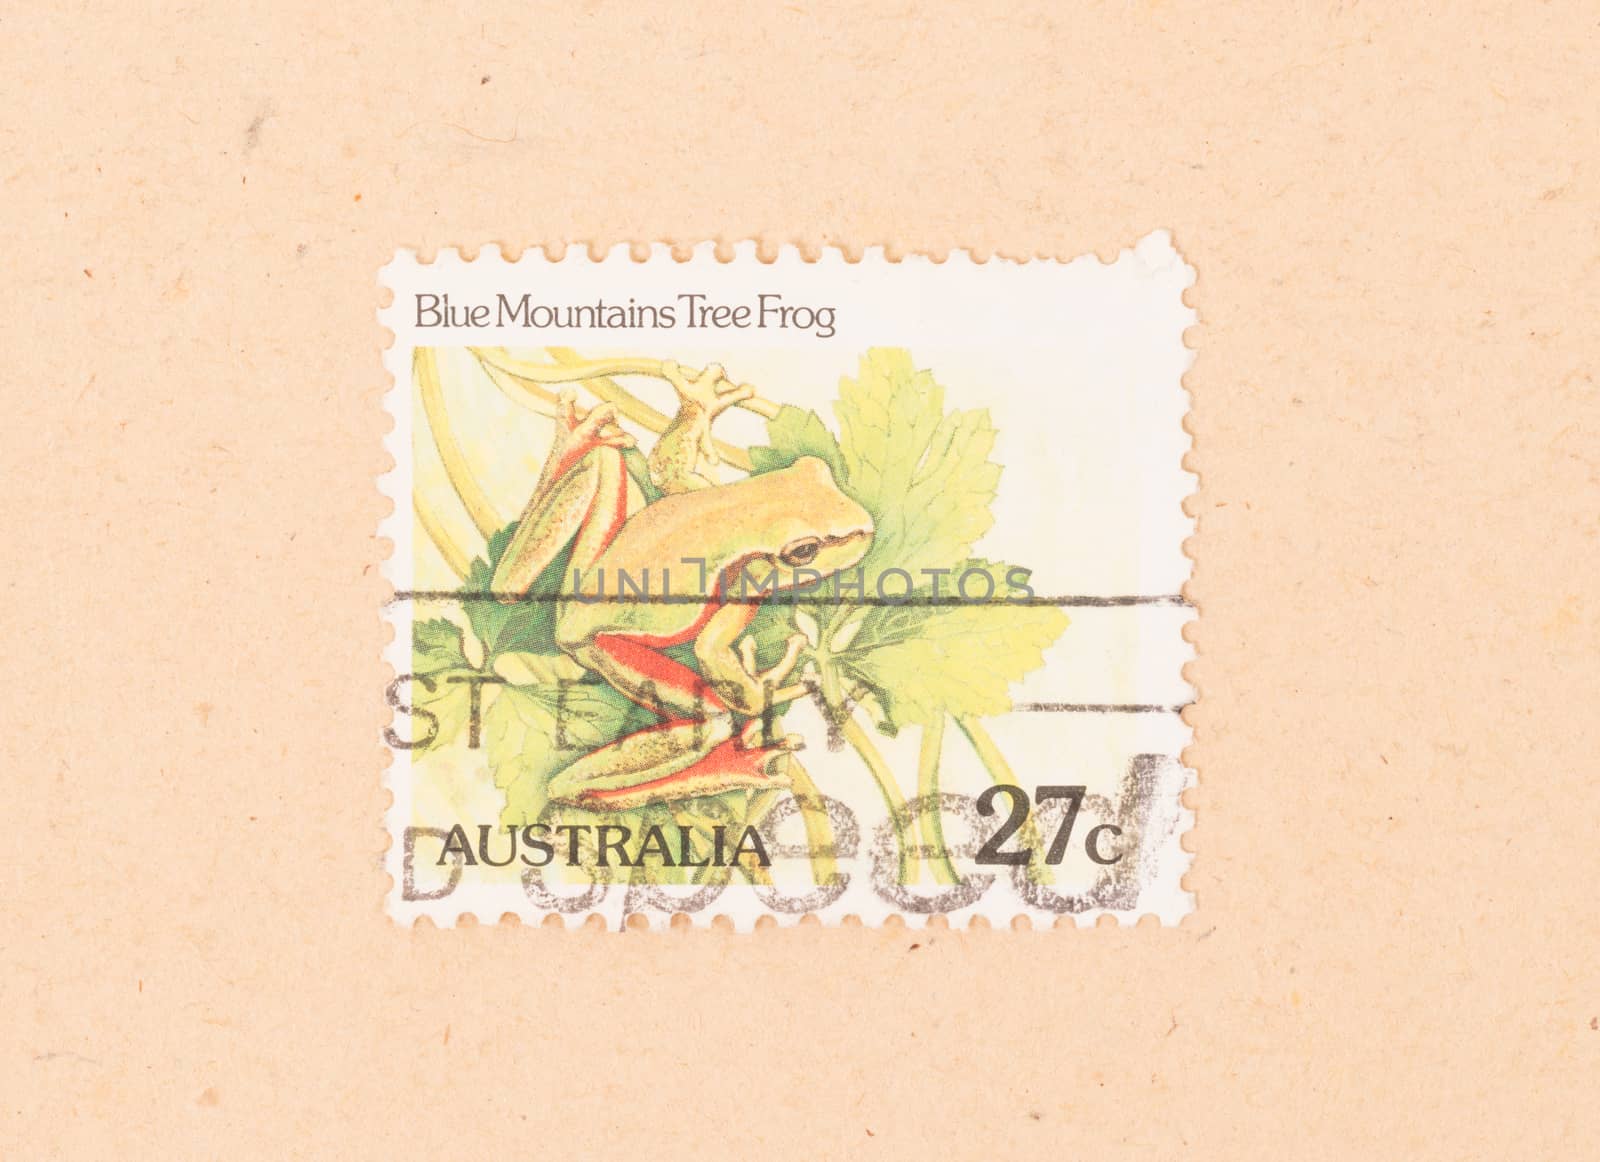 AUSTRALIA - CIRCA 1980: A stamp printed in Australia shows a blu by michaklootwijk